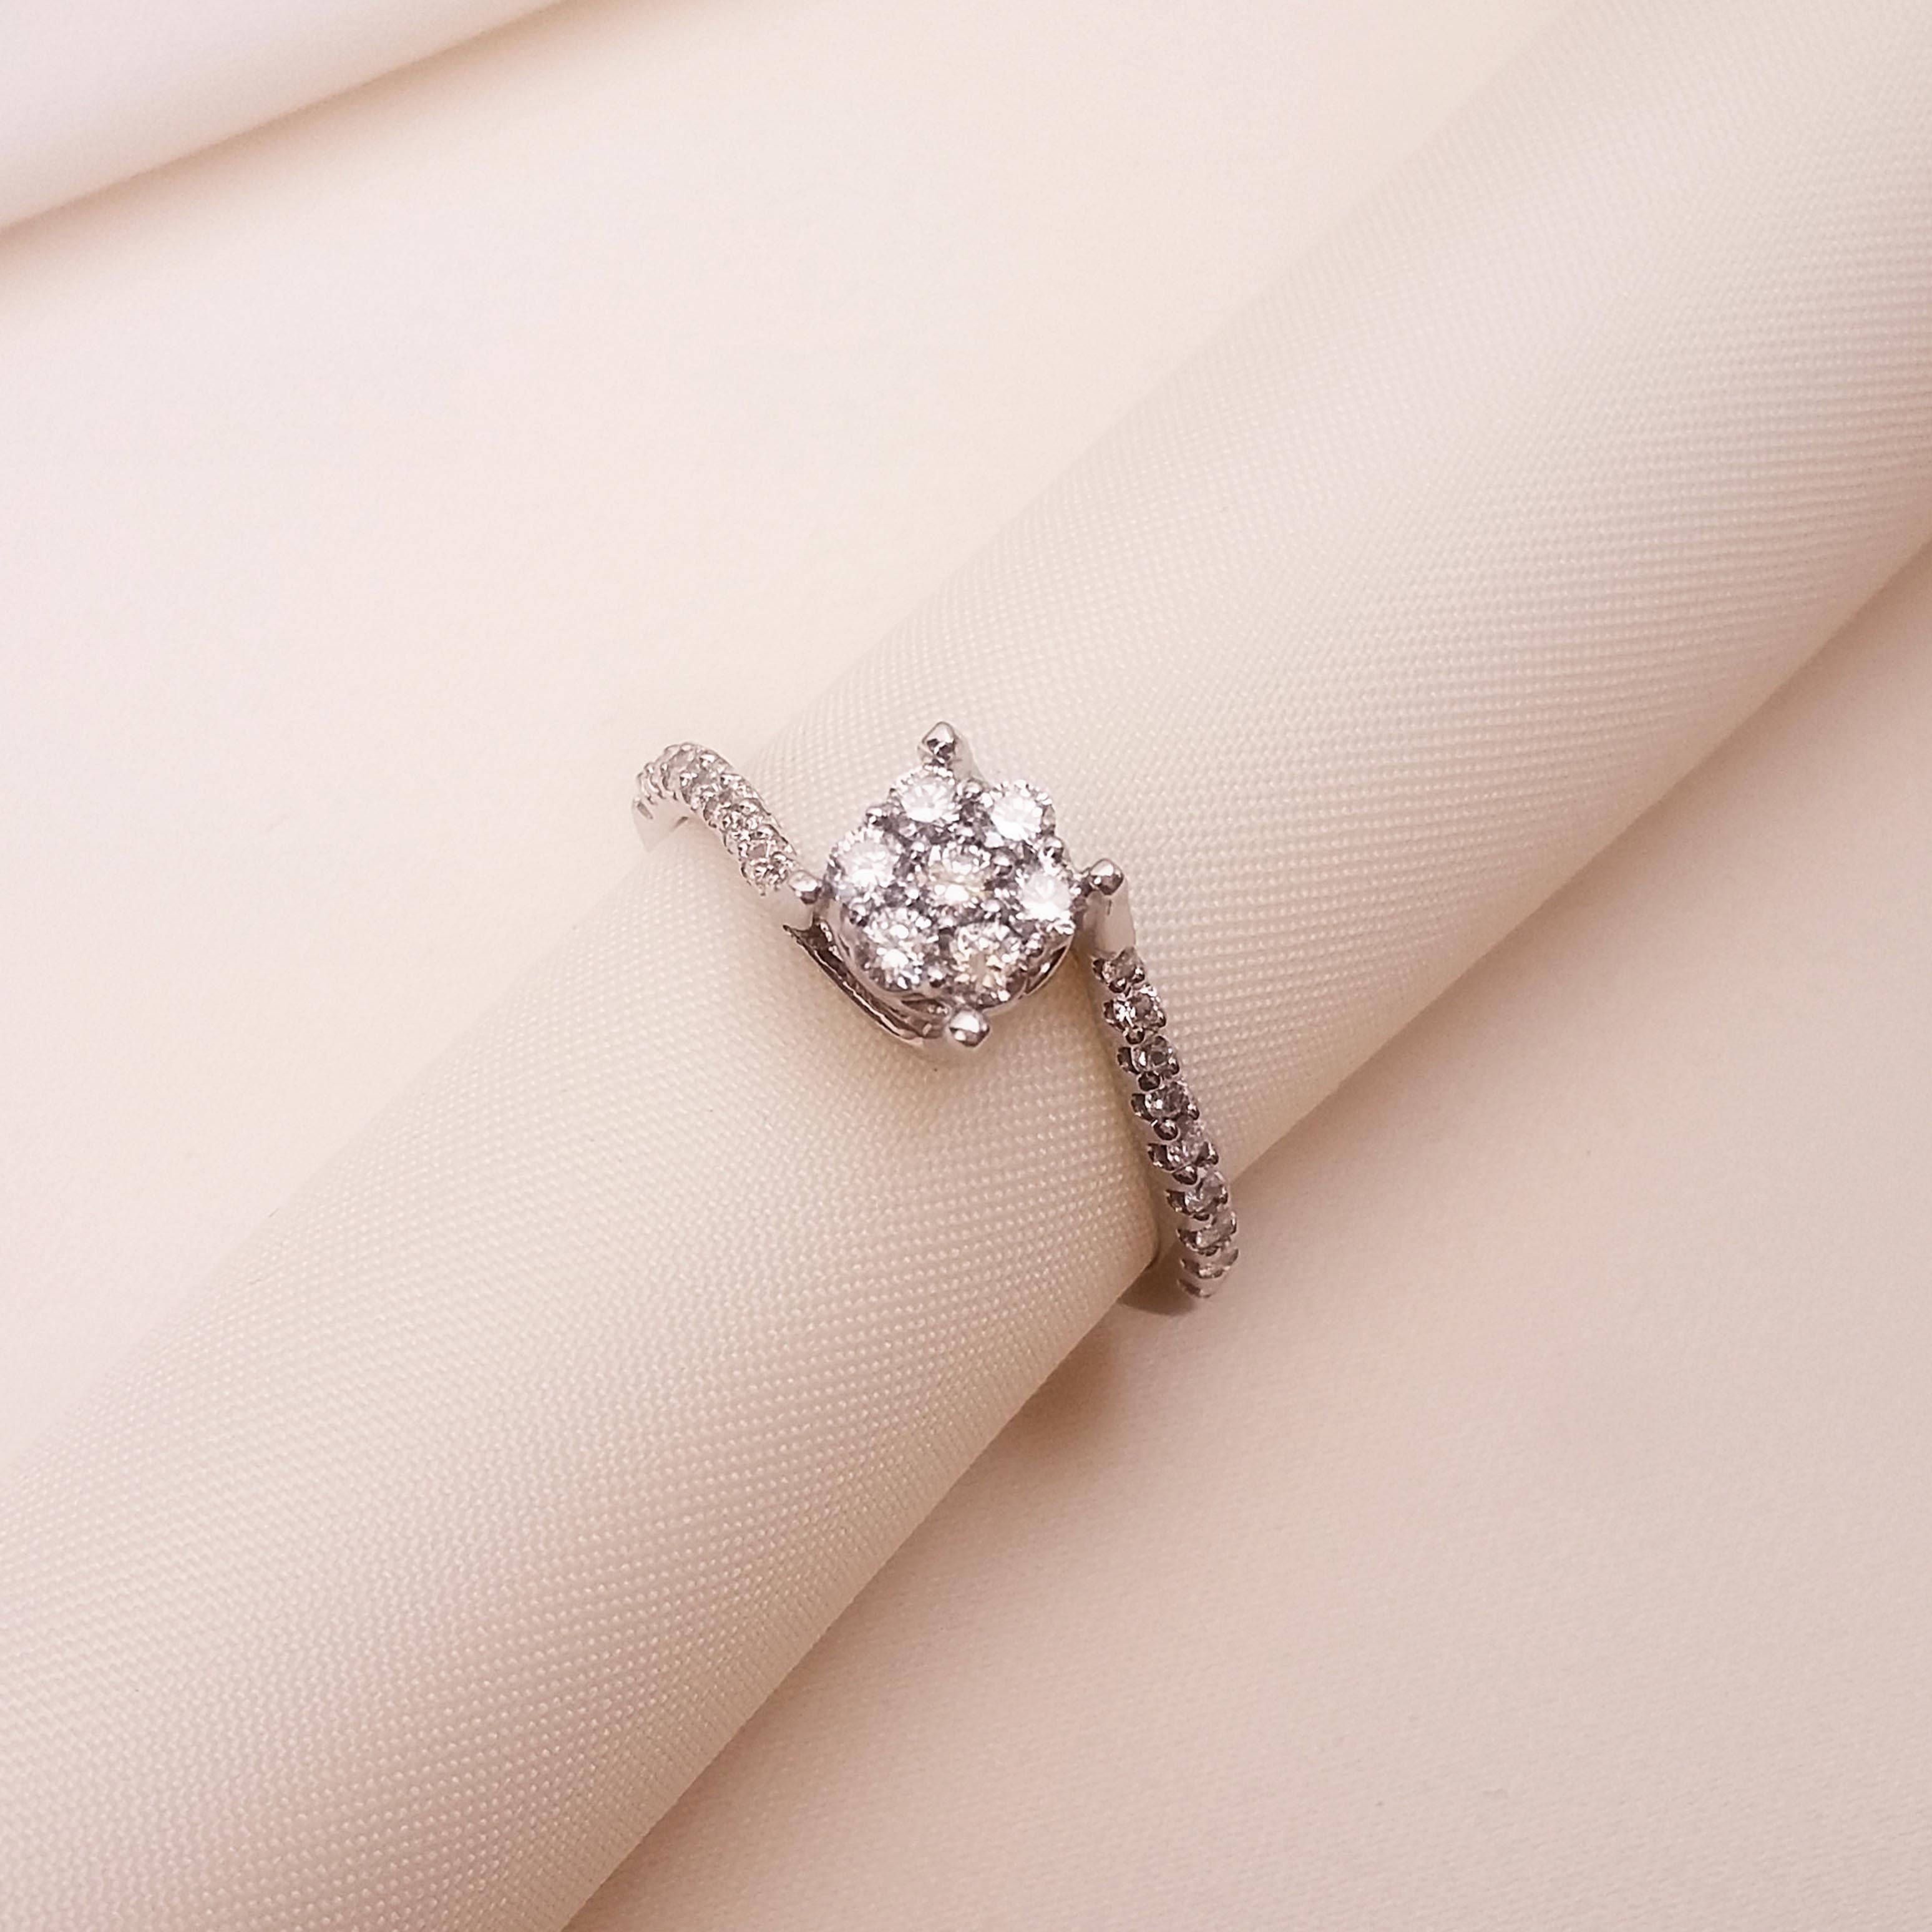 White Gold Ring with Small Brilliant Cut Diamonds | KLENOTA